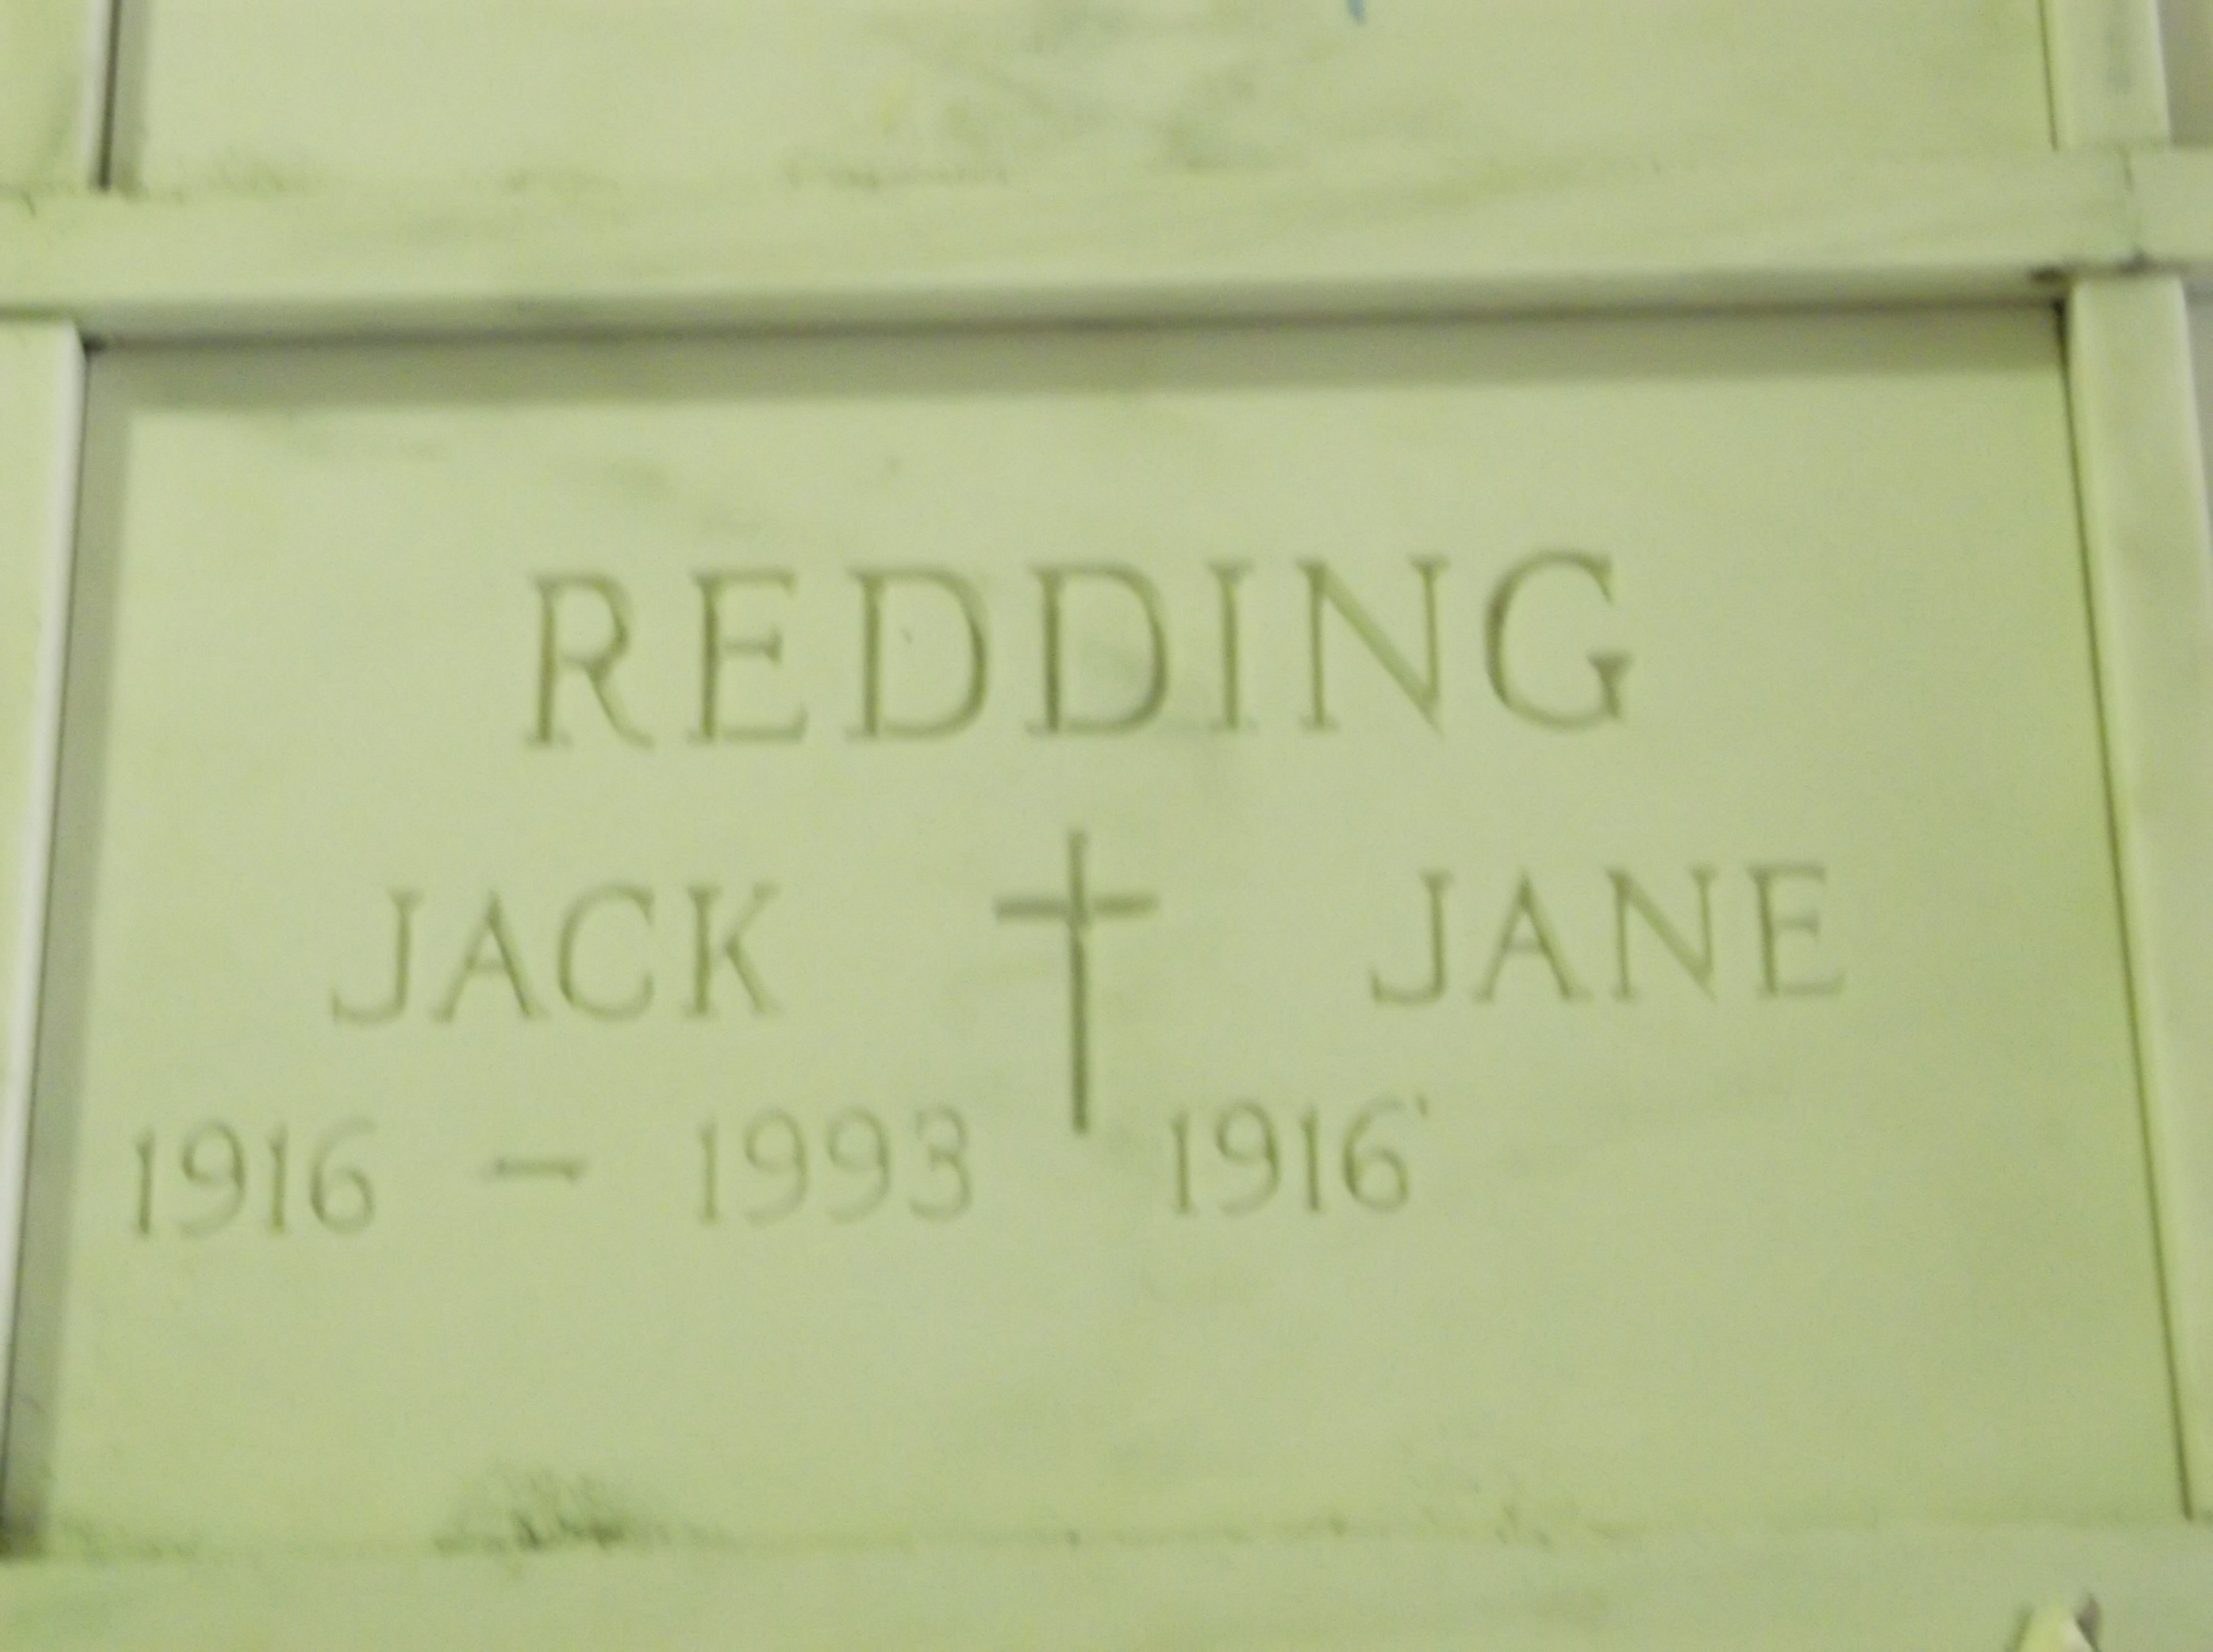 Jane Redding